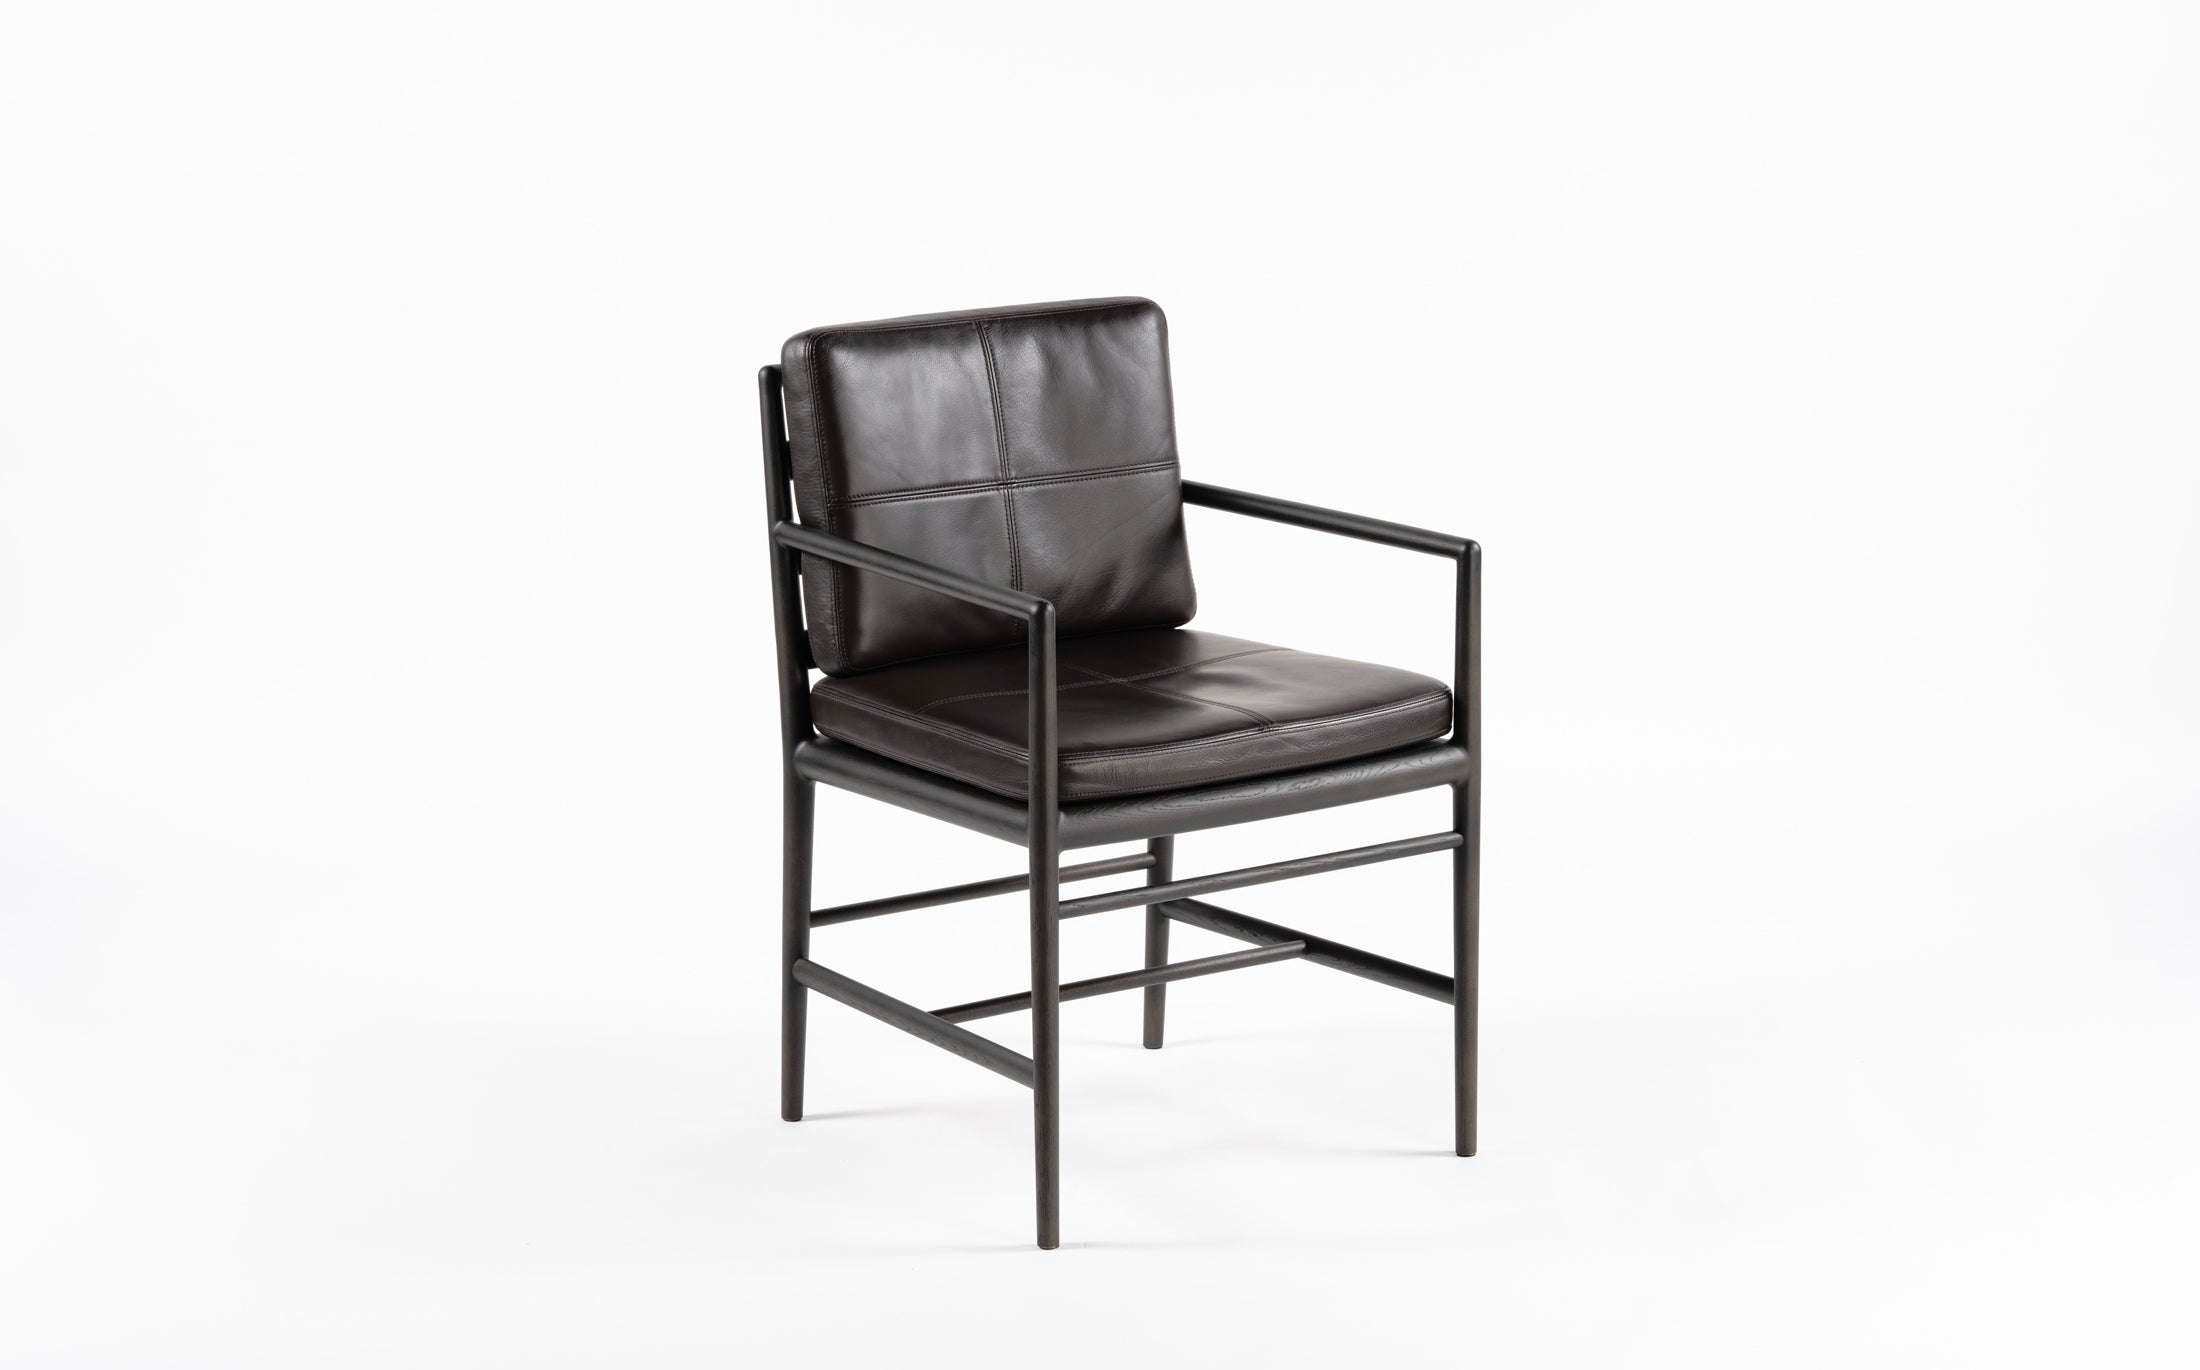 The sensitive comfortable armchair - Charcoal grey - SP20-437